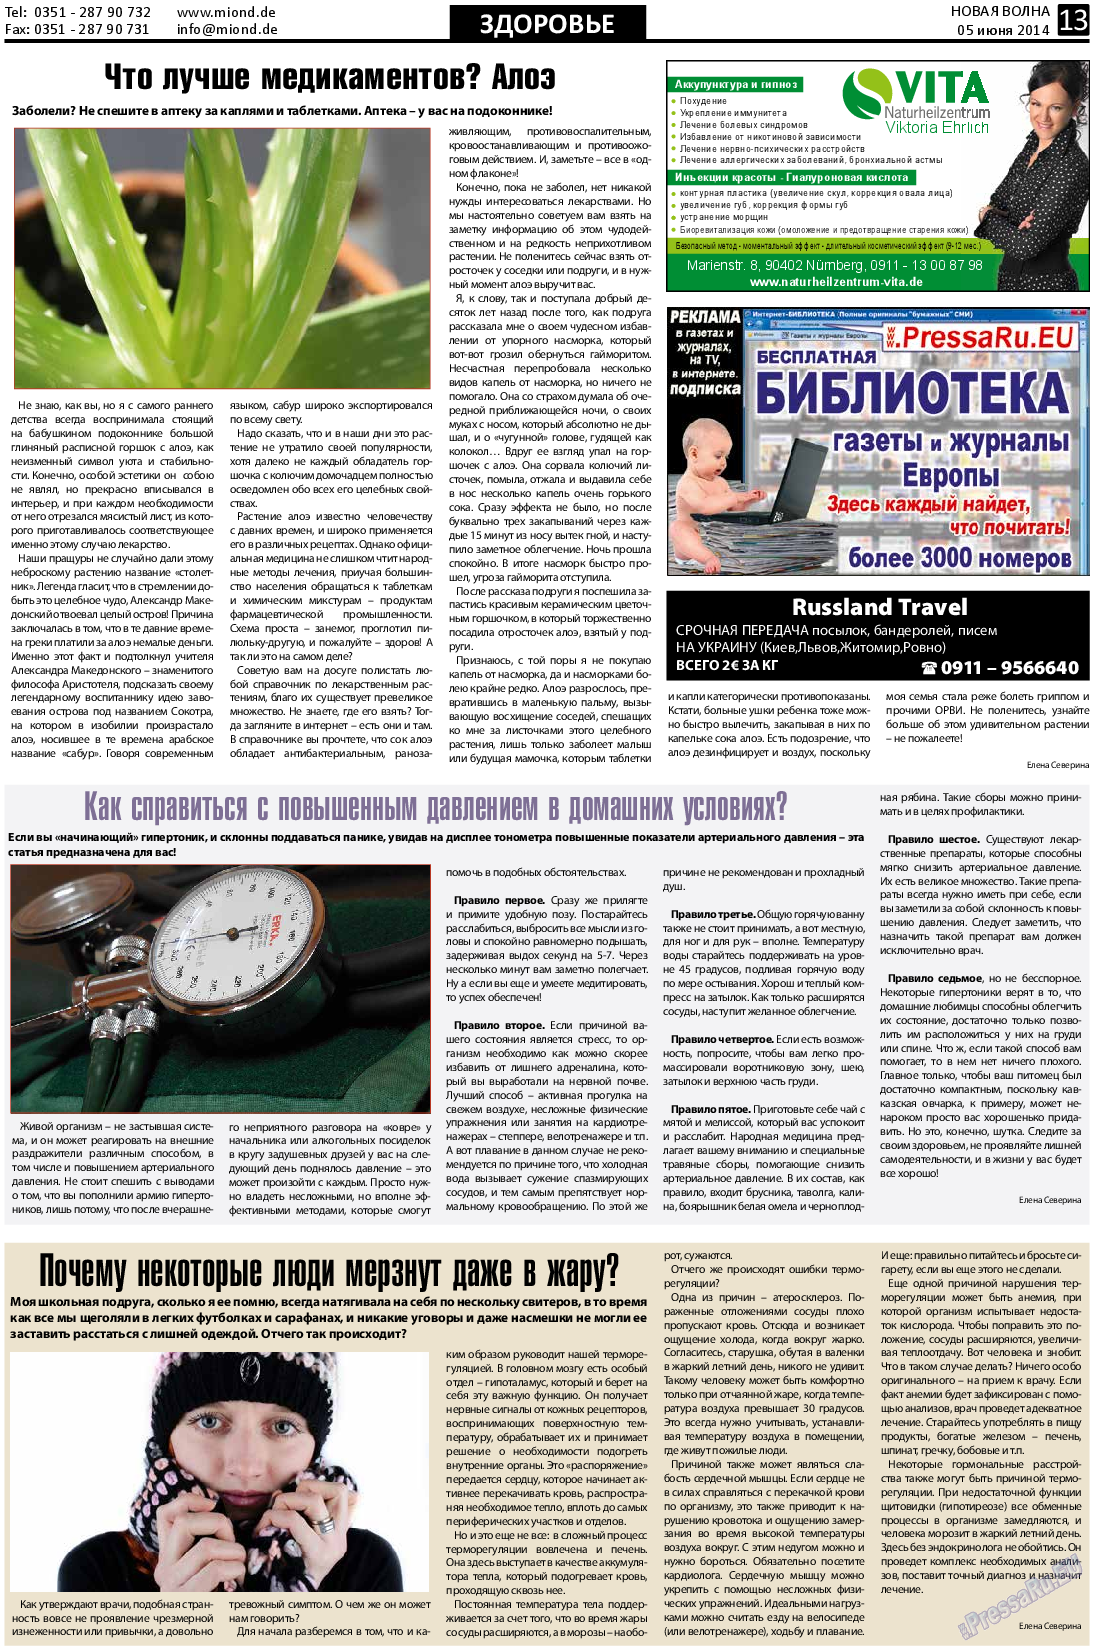 Новая Wолна, газета. 2014 №23 стр.13